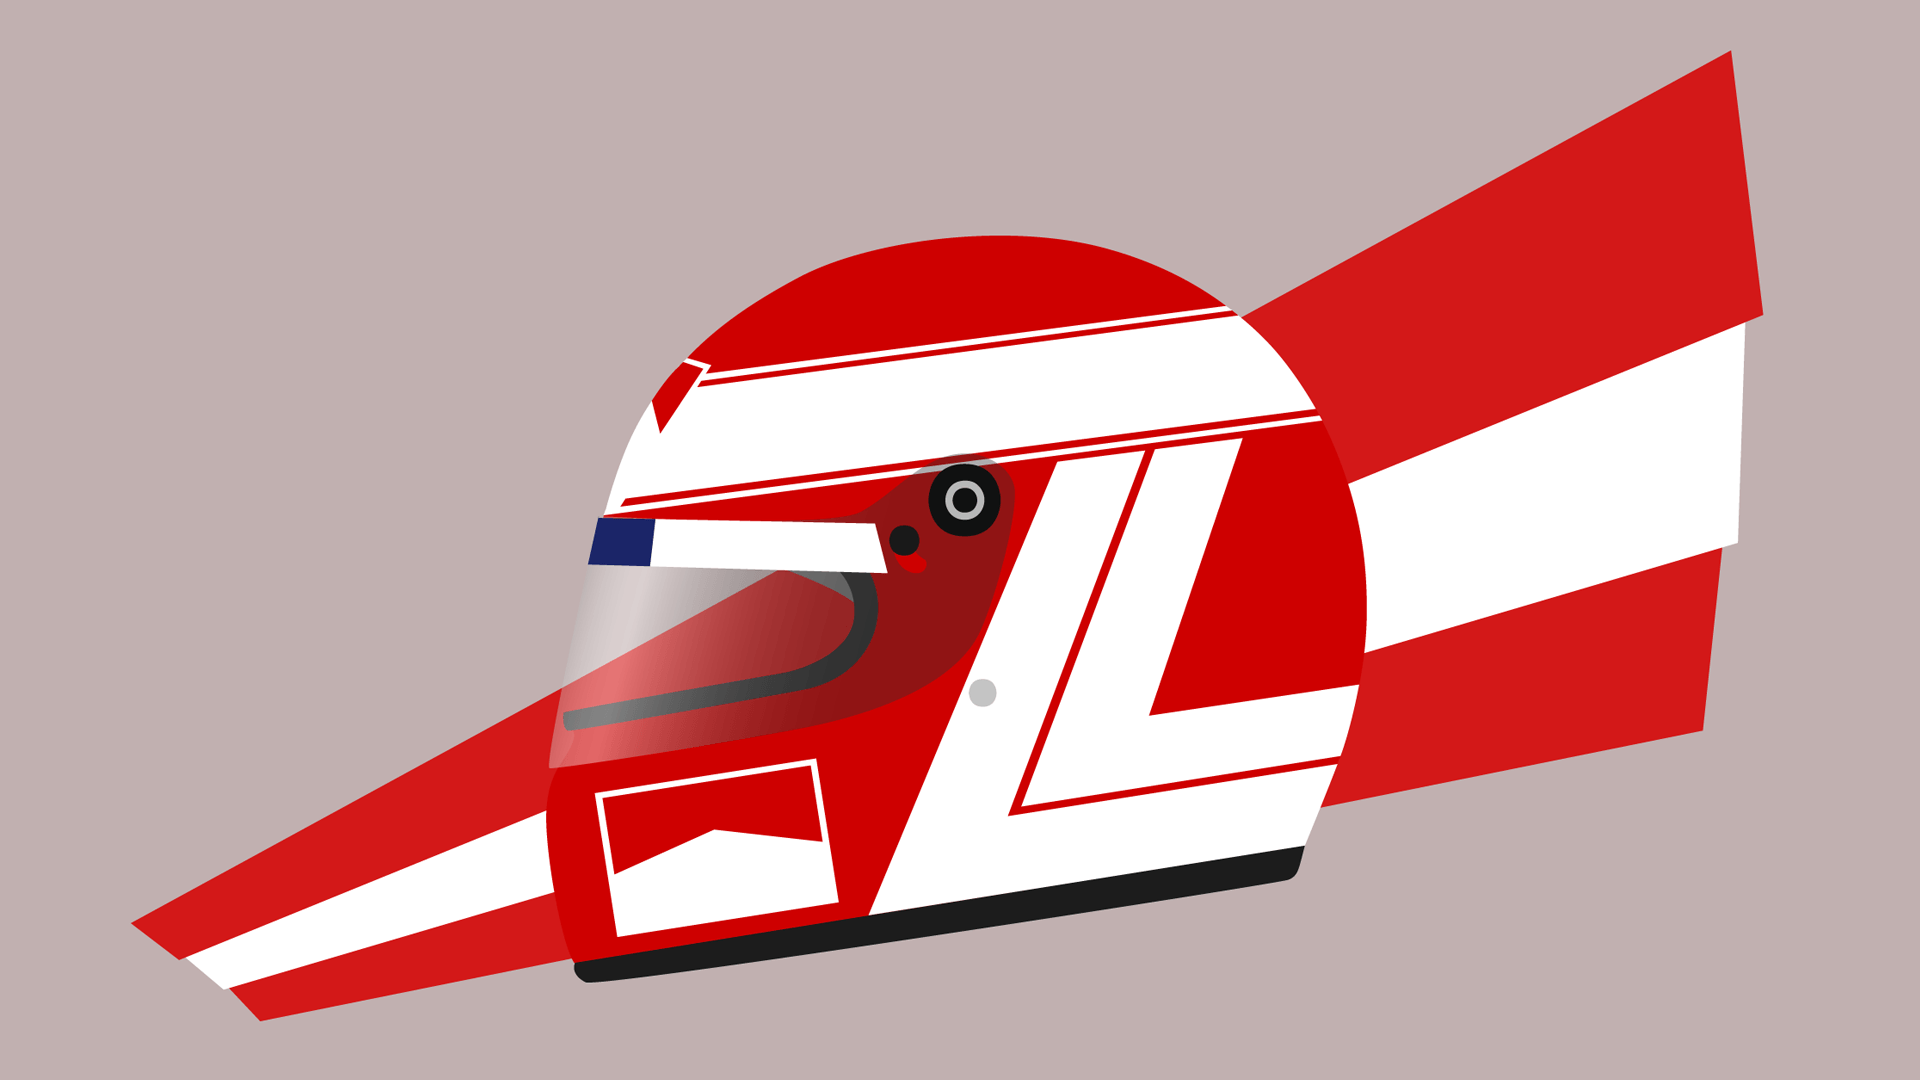 Design: Niki Lauda's 1984 helmet